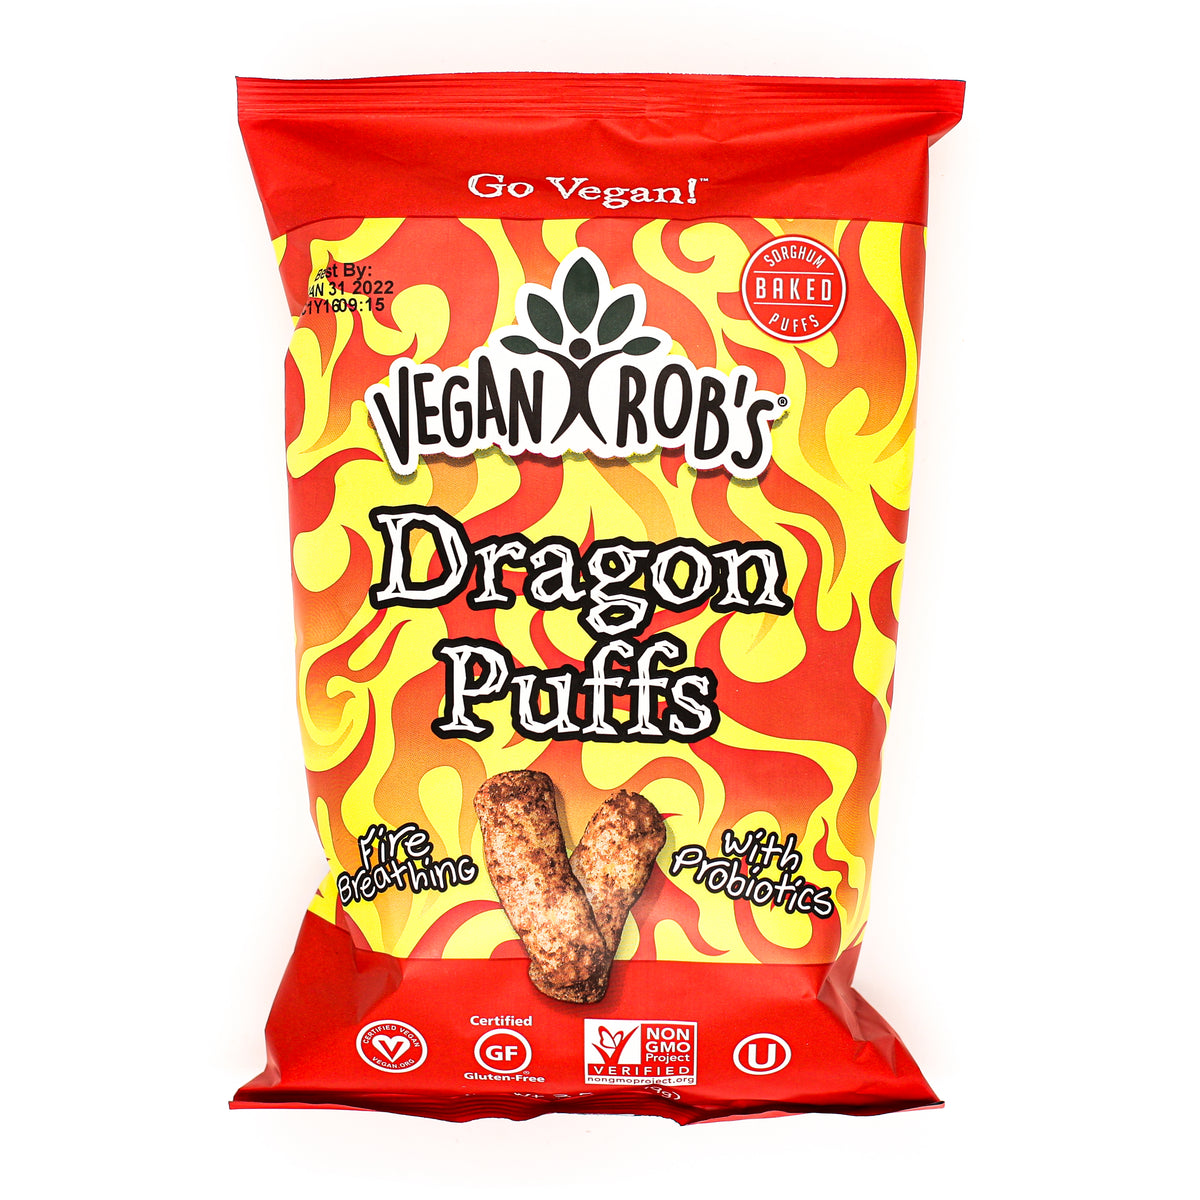 Vegan Robs Dragon Puff